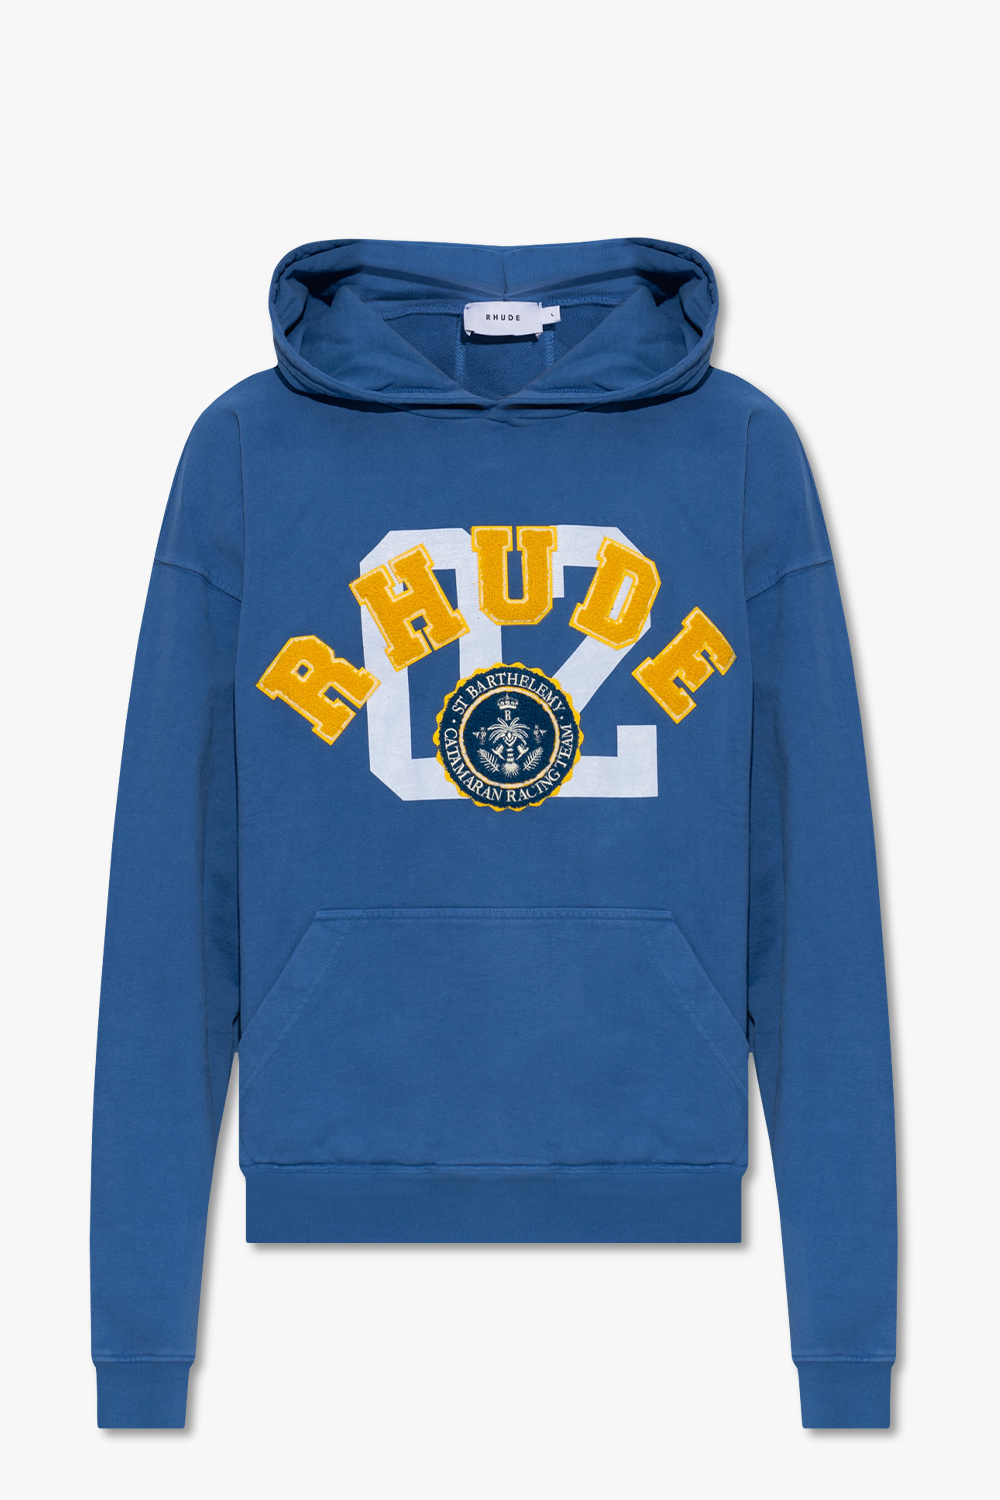 logo embroidered jersey Nylon hoodie - GenesinlifeShops Australia - Blue  Space Plein bomber jacket Rhude